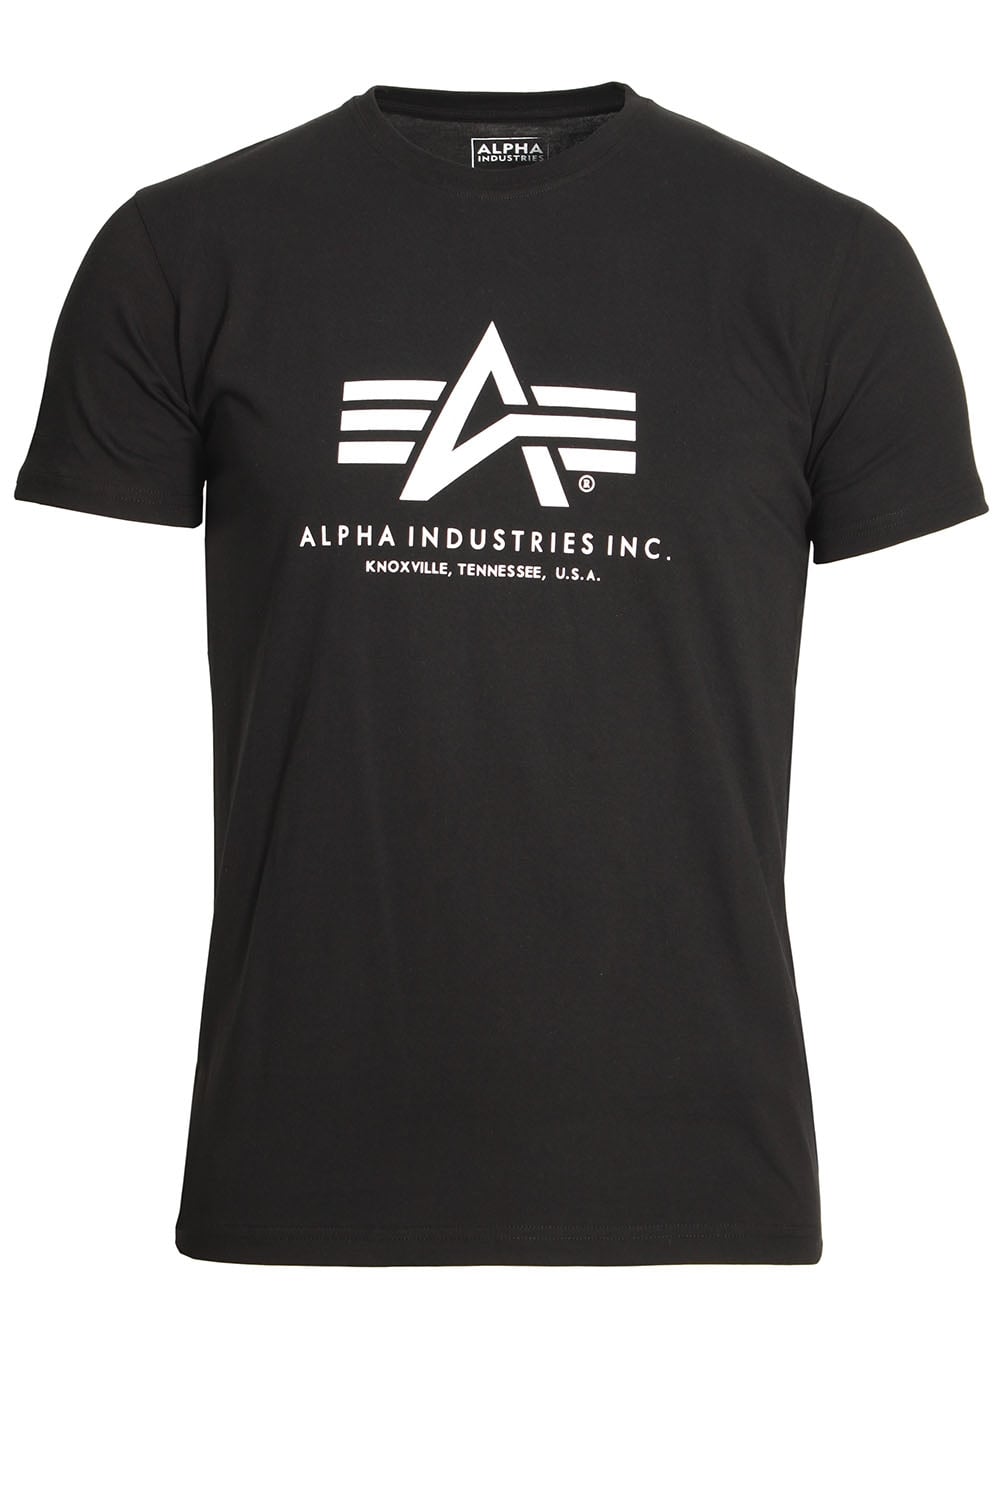 Basic Logo Alpha (100501/03) Industries 515 Large - T-Shirt Black The -